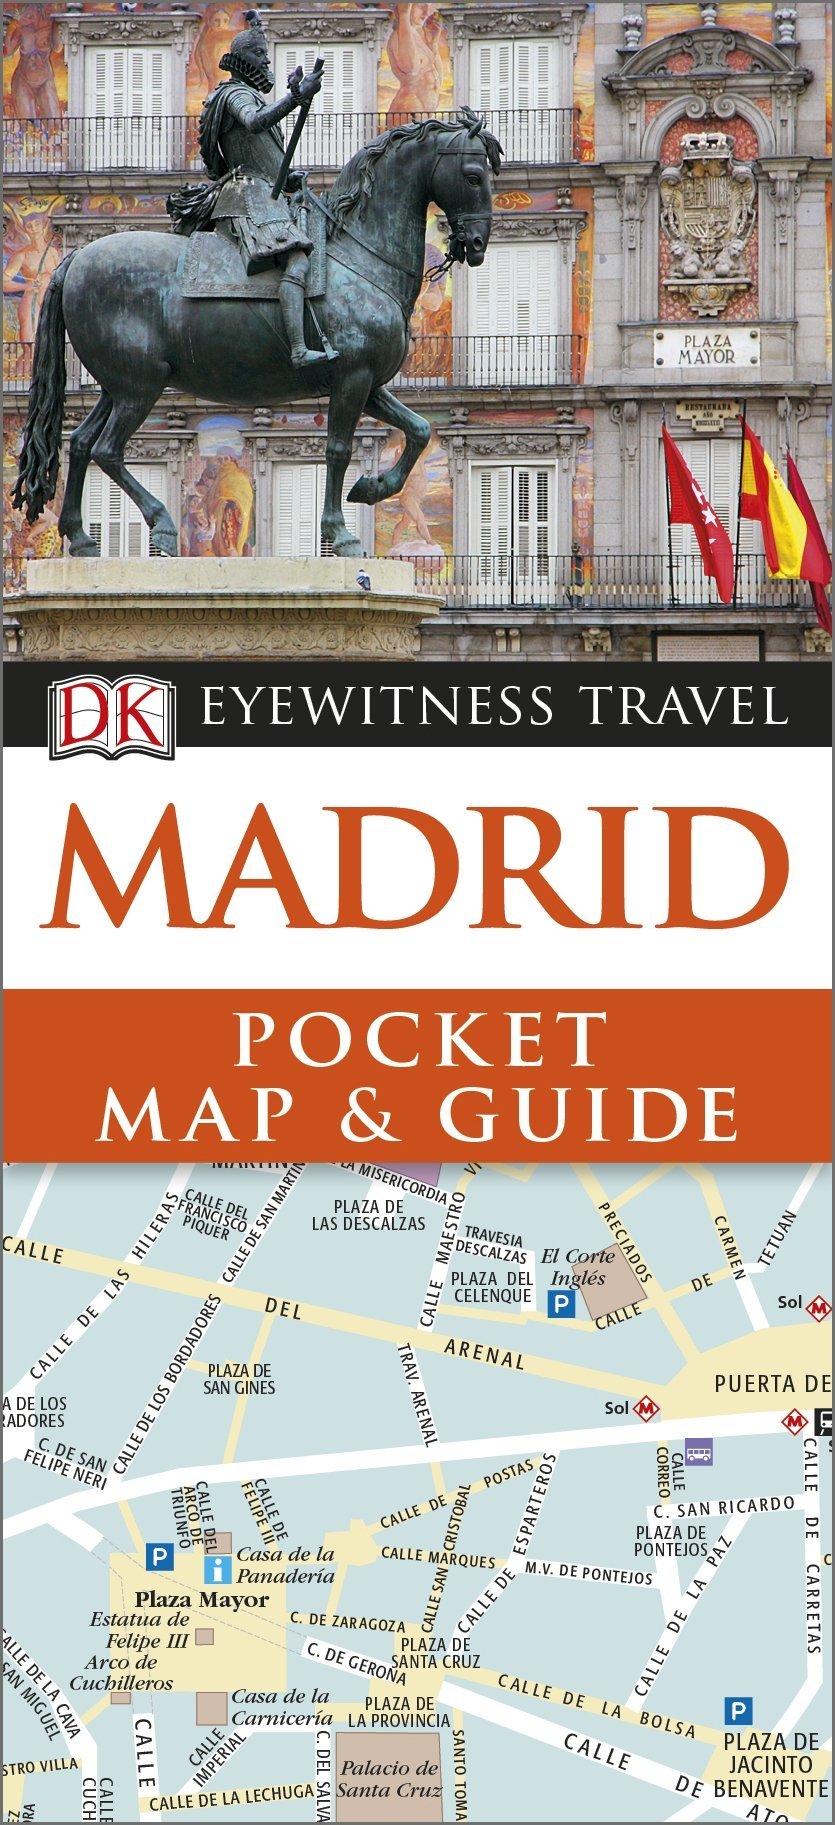 DK Eyewitness Pocket Map and Guide - Madrid